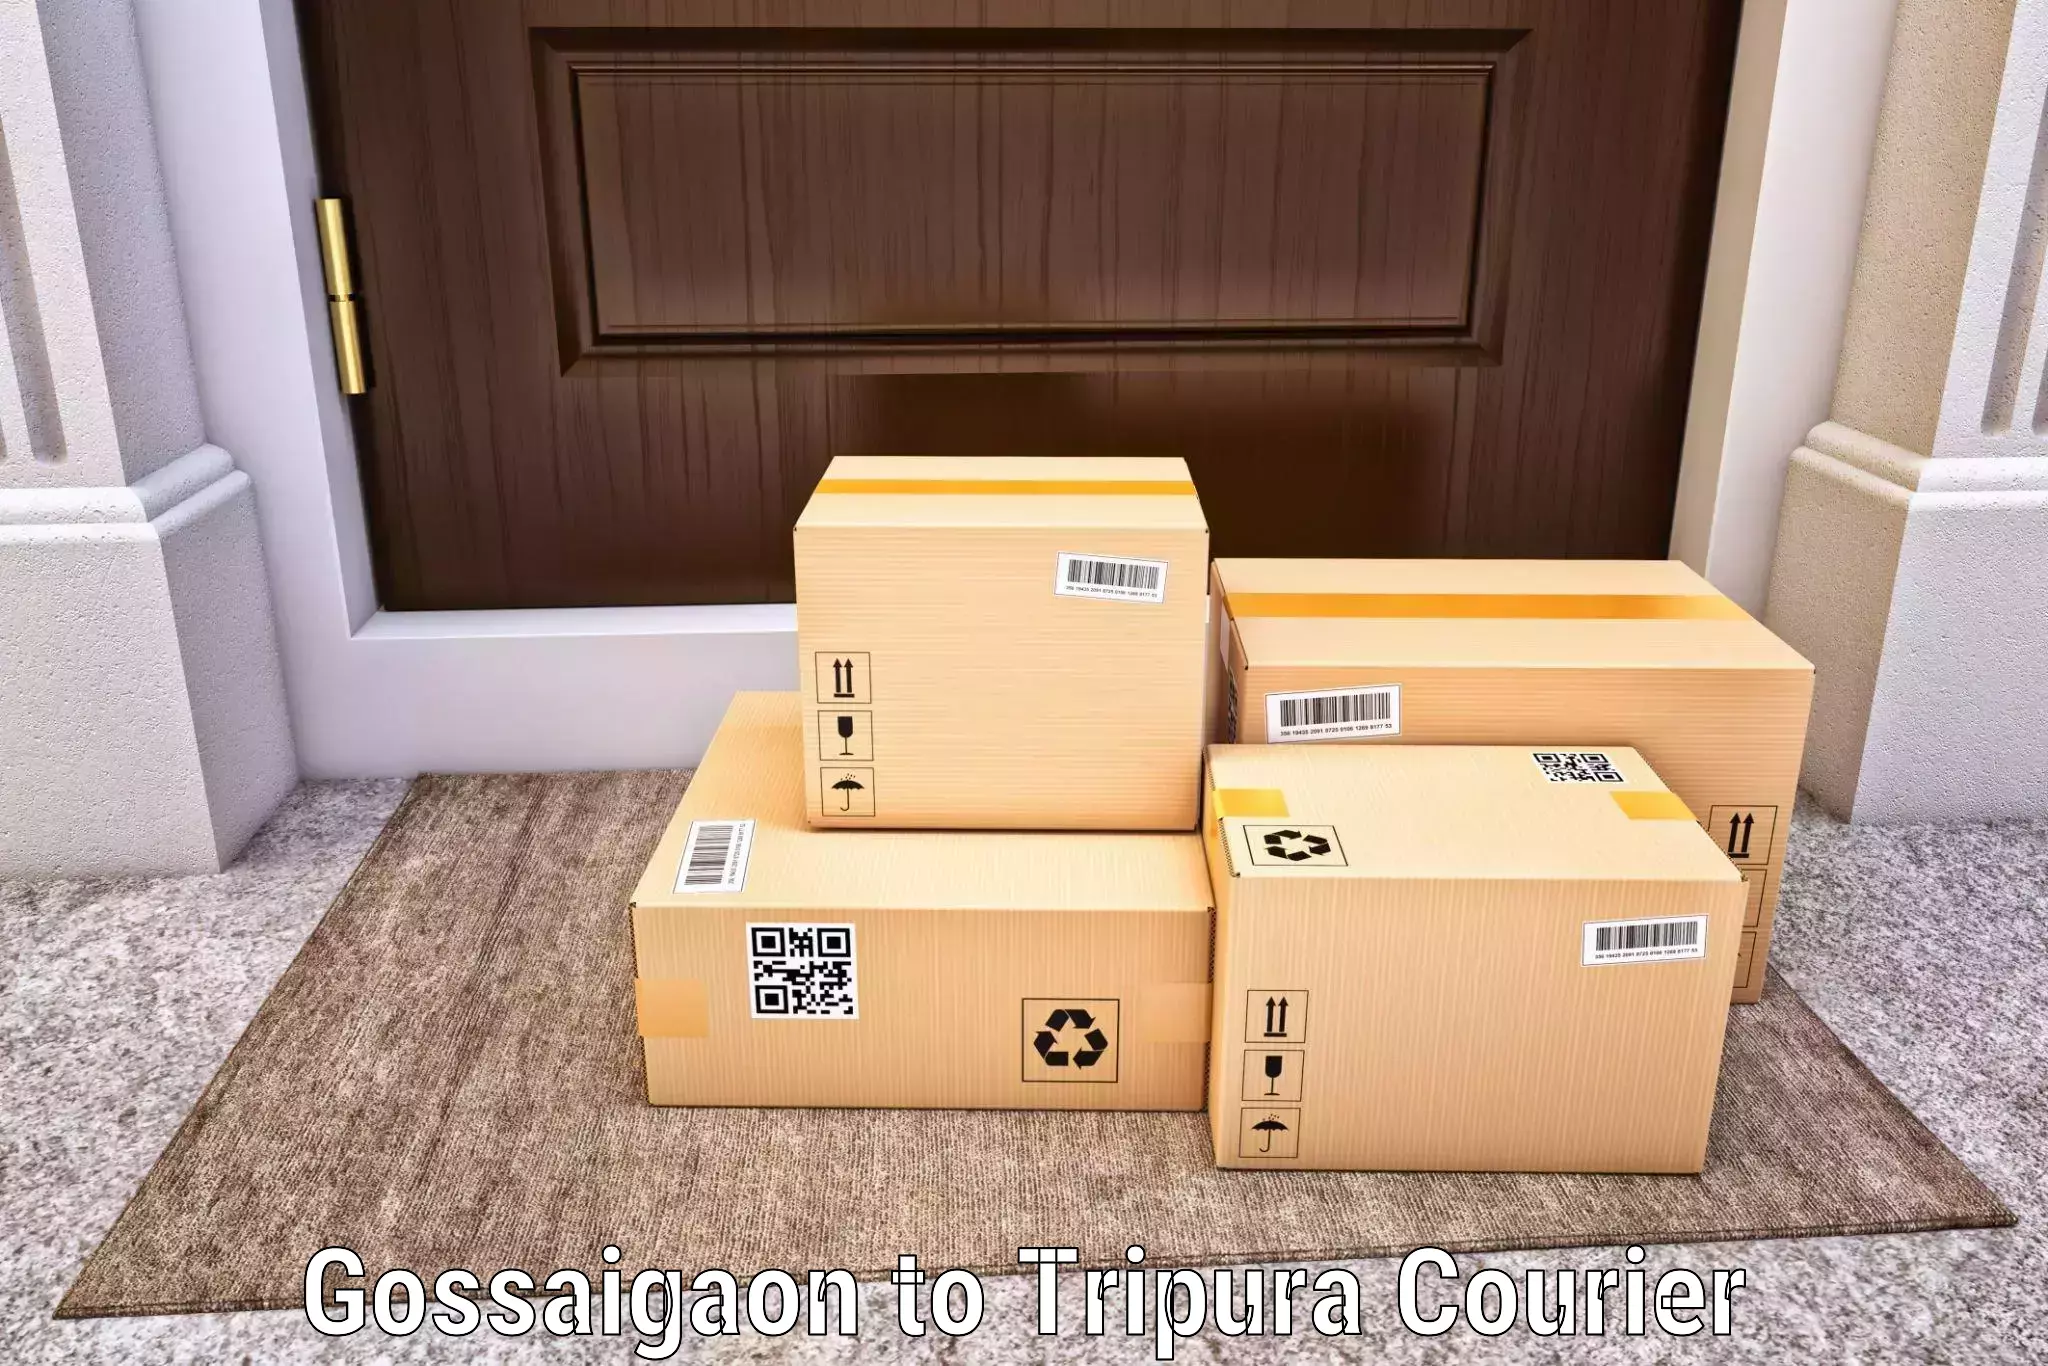 Courier service innovation Gossaigaon to Khowai